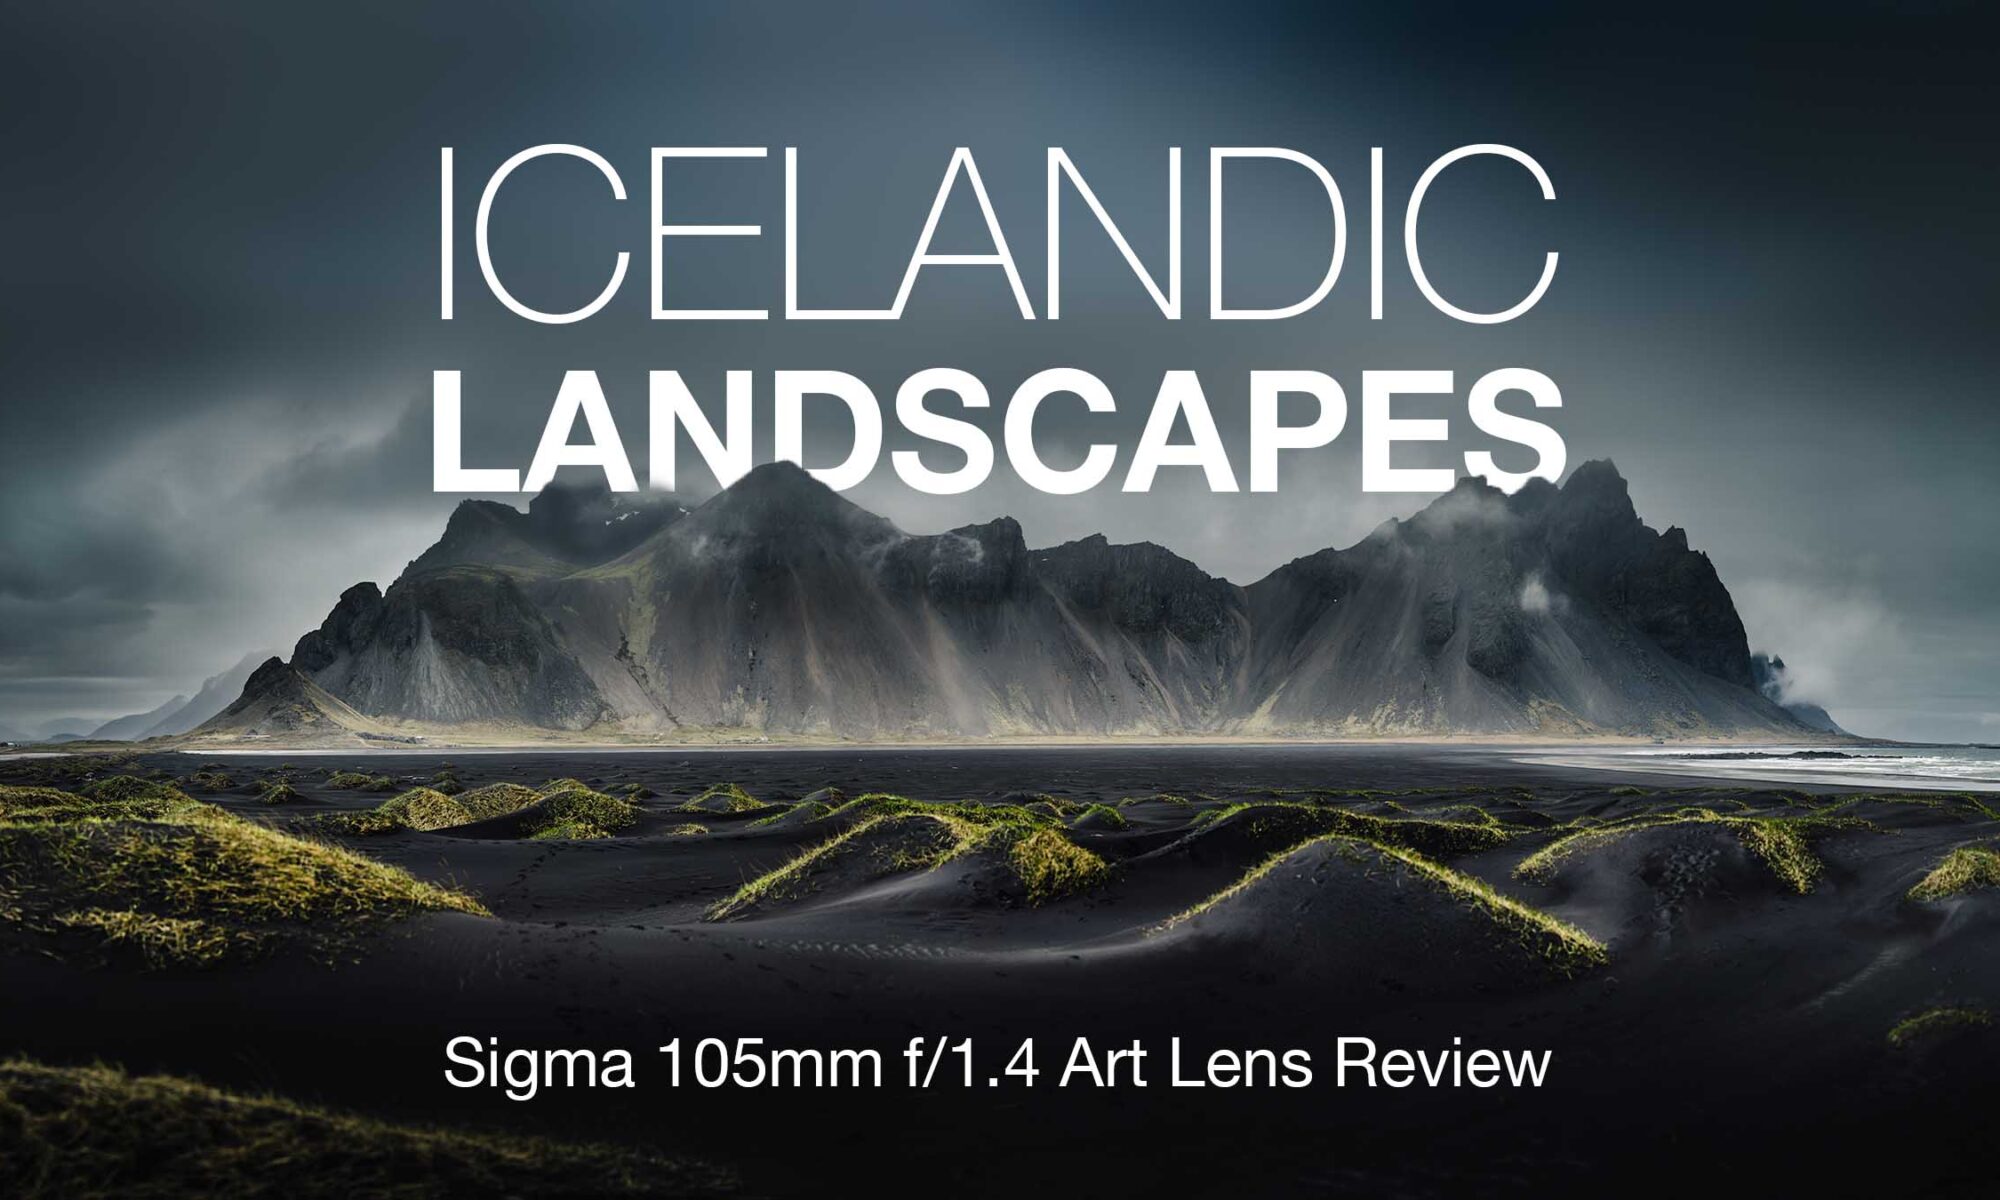 Sigma 105mm f/1.4 Art Lens Review: Icelandic Landscapes